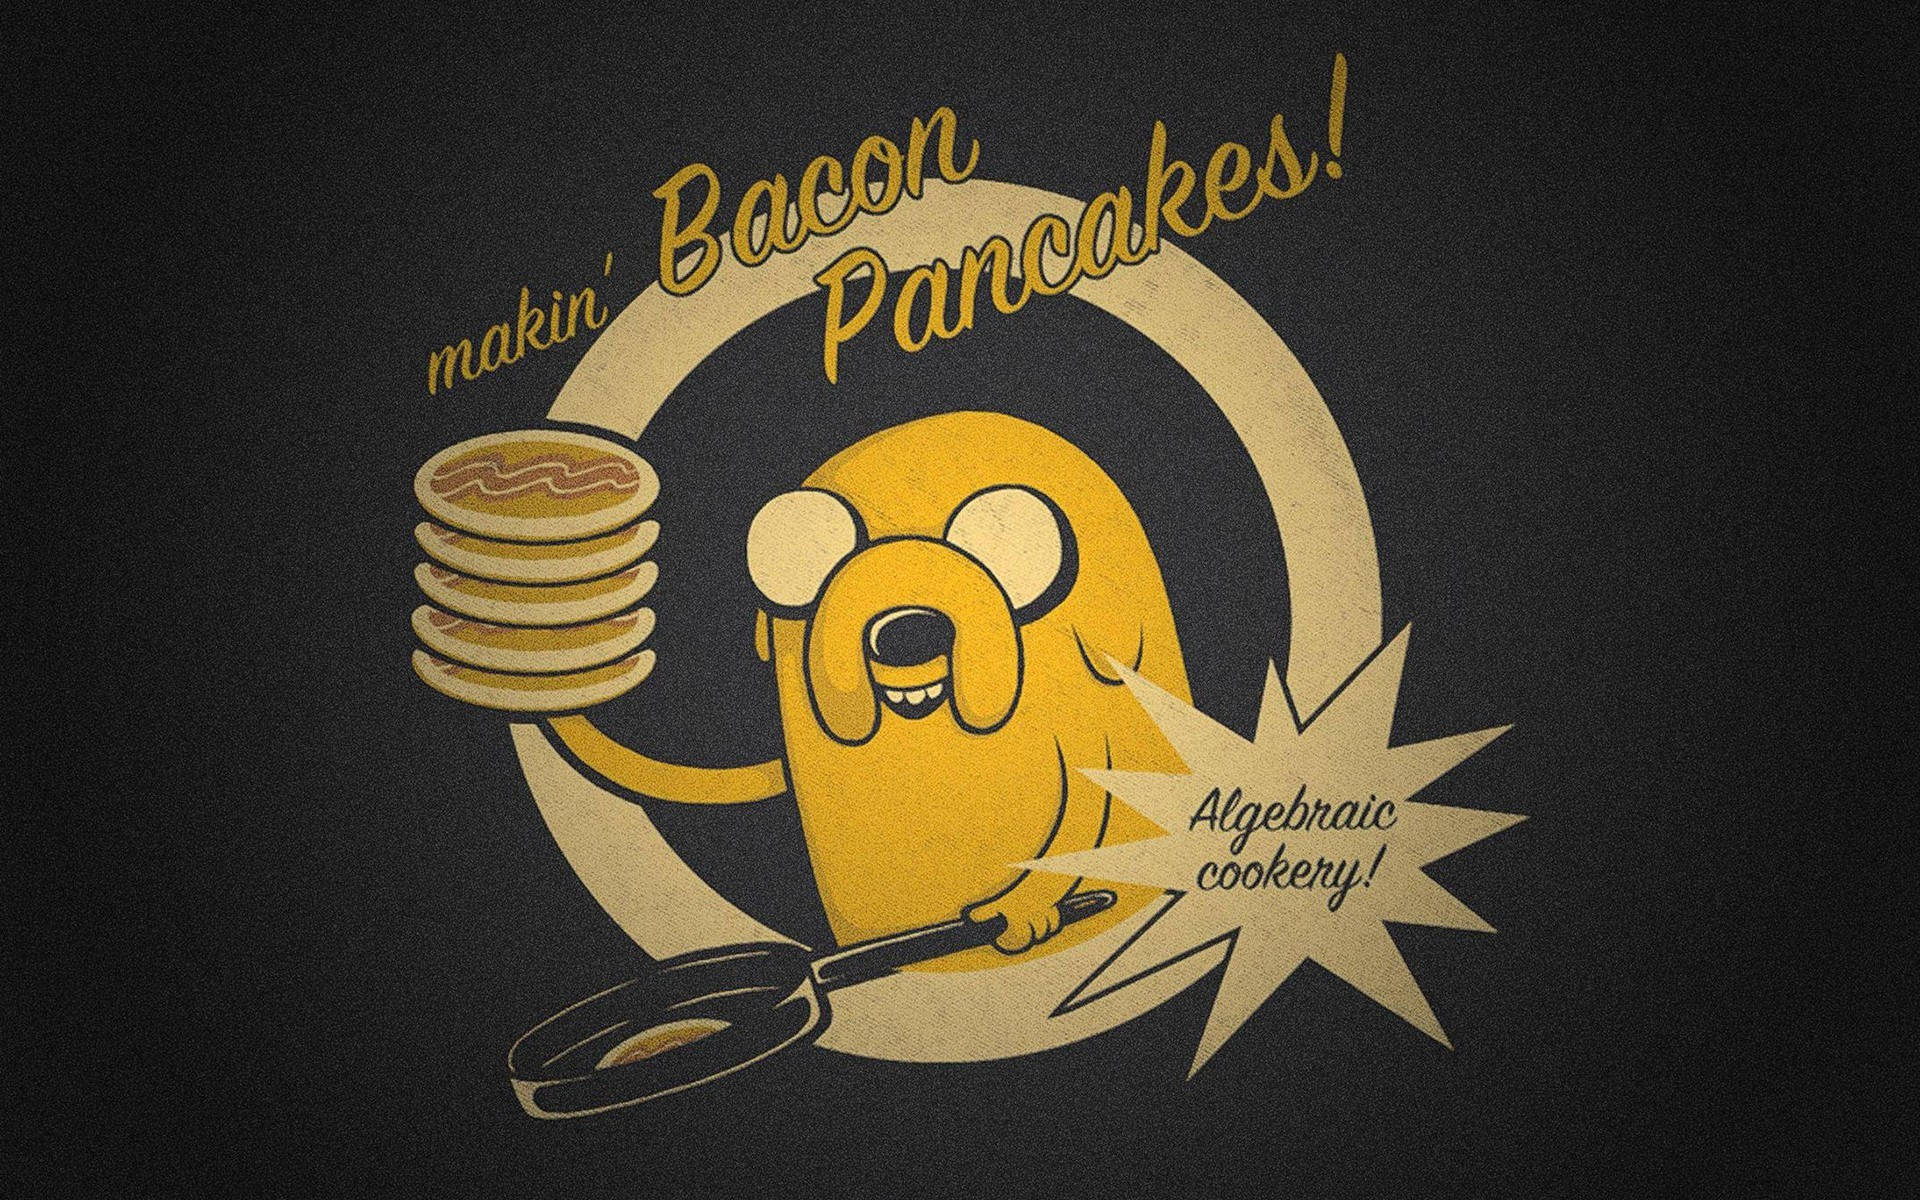 Jake Bacon Pancakes Nerd Background